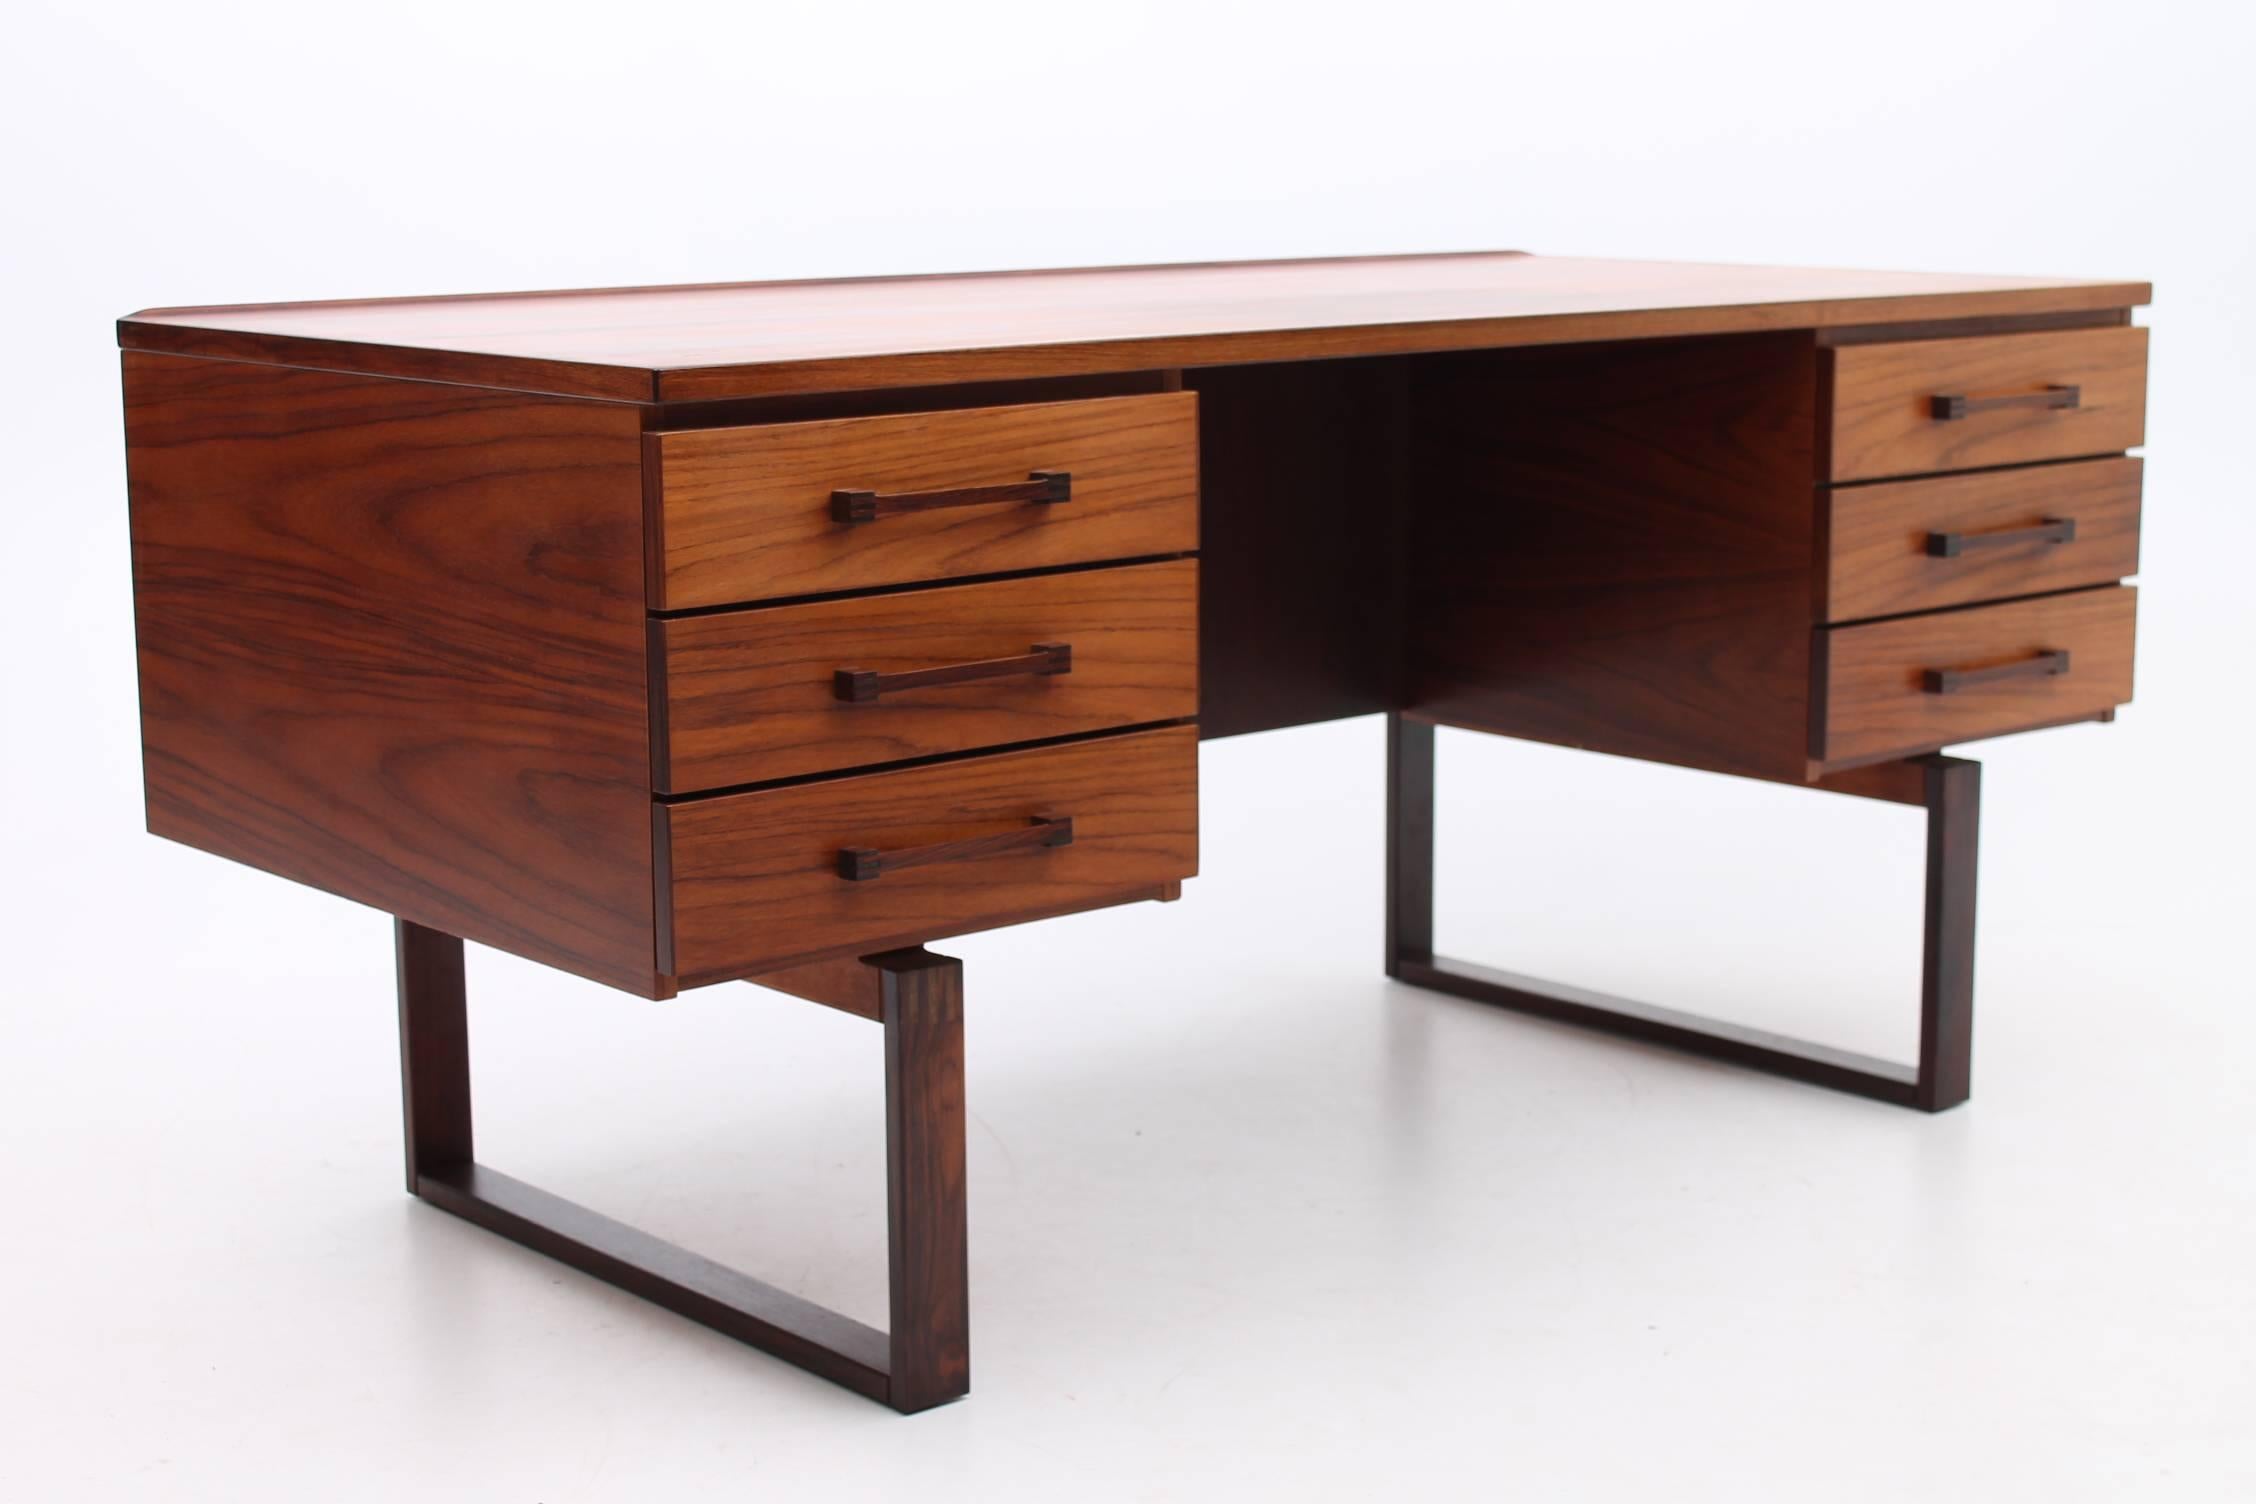 Danish Rosewood Desk by Preben Schou Andersen for PSA Furniture, Scandinavian Modern